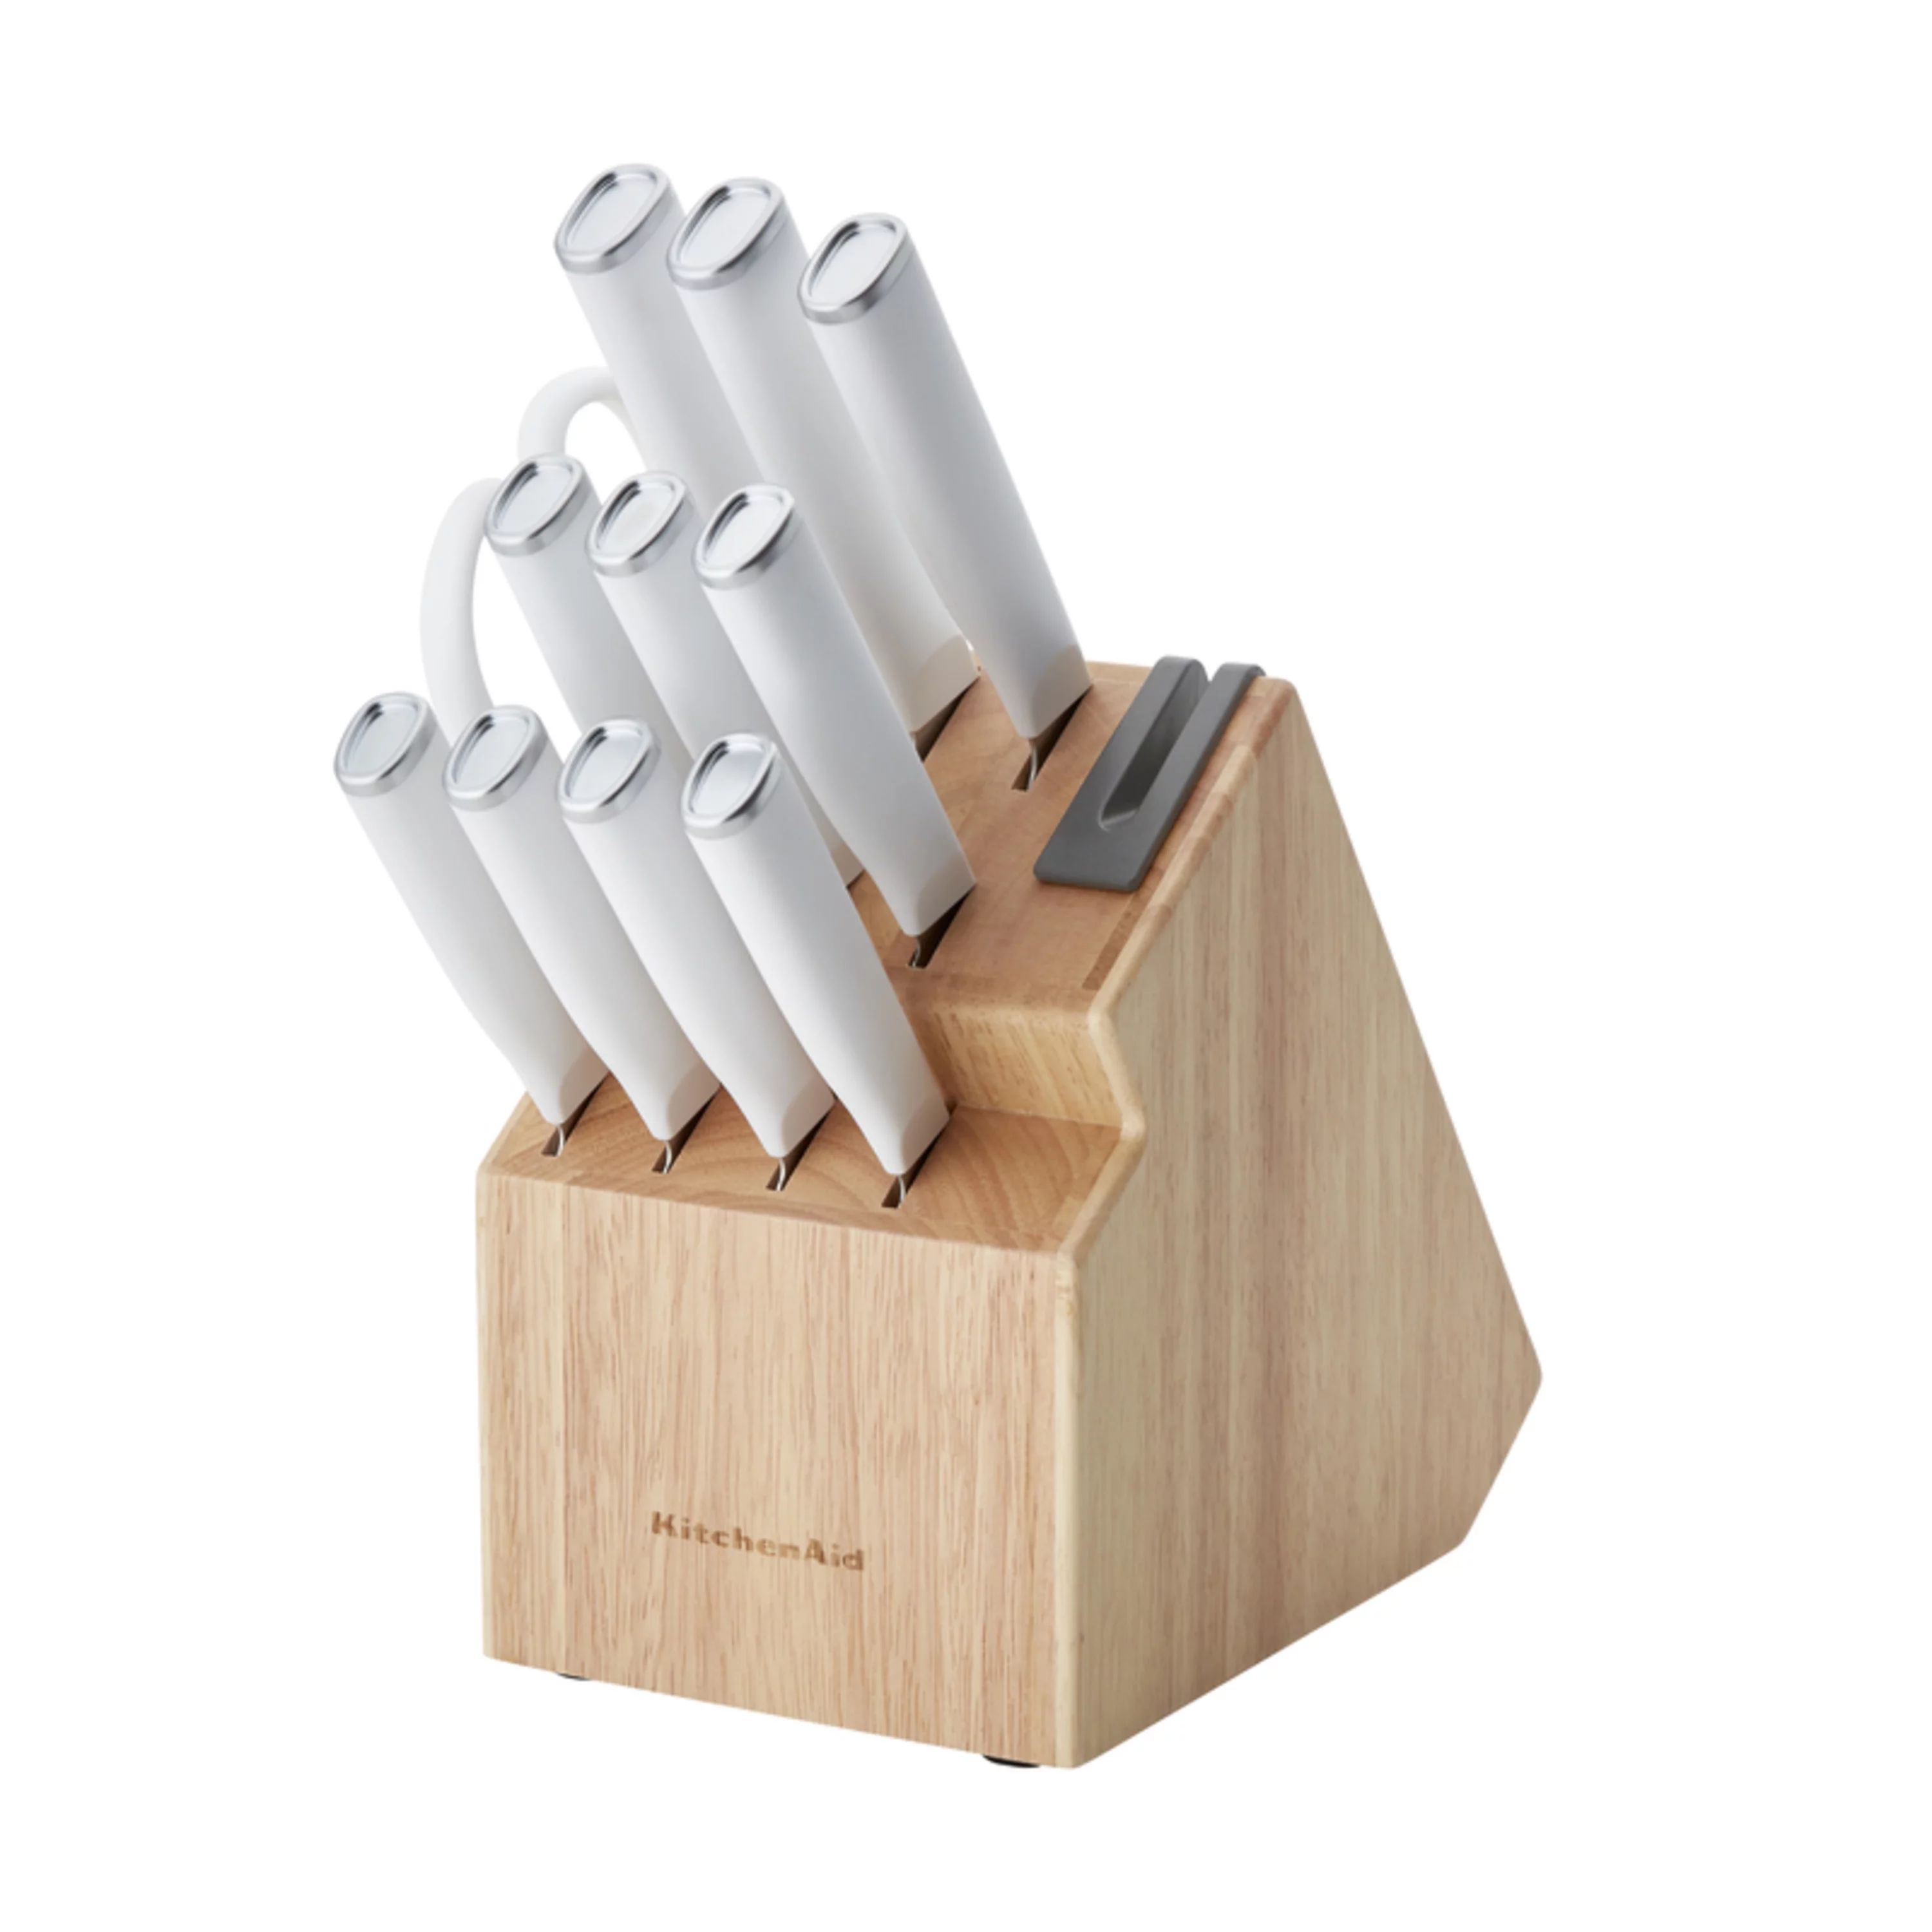 KitchenAid Classic Japanese Steel 12-Piece Knife Block Set with Built-in Knife Sharpener, White -... | Walmart (US)